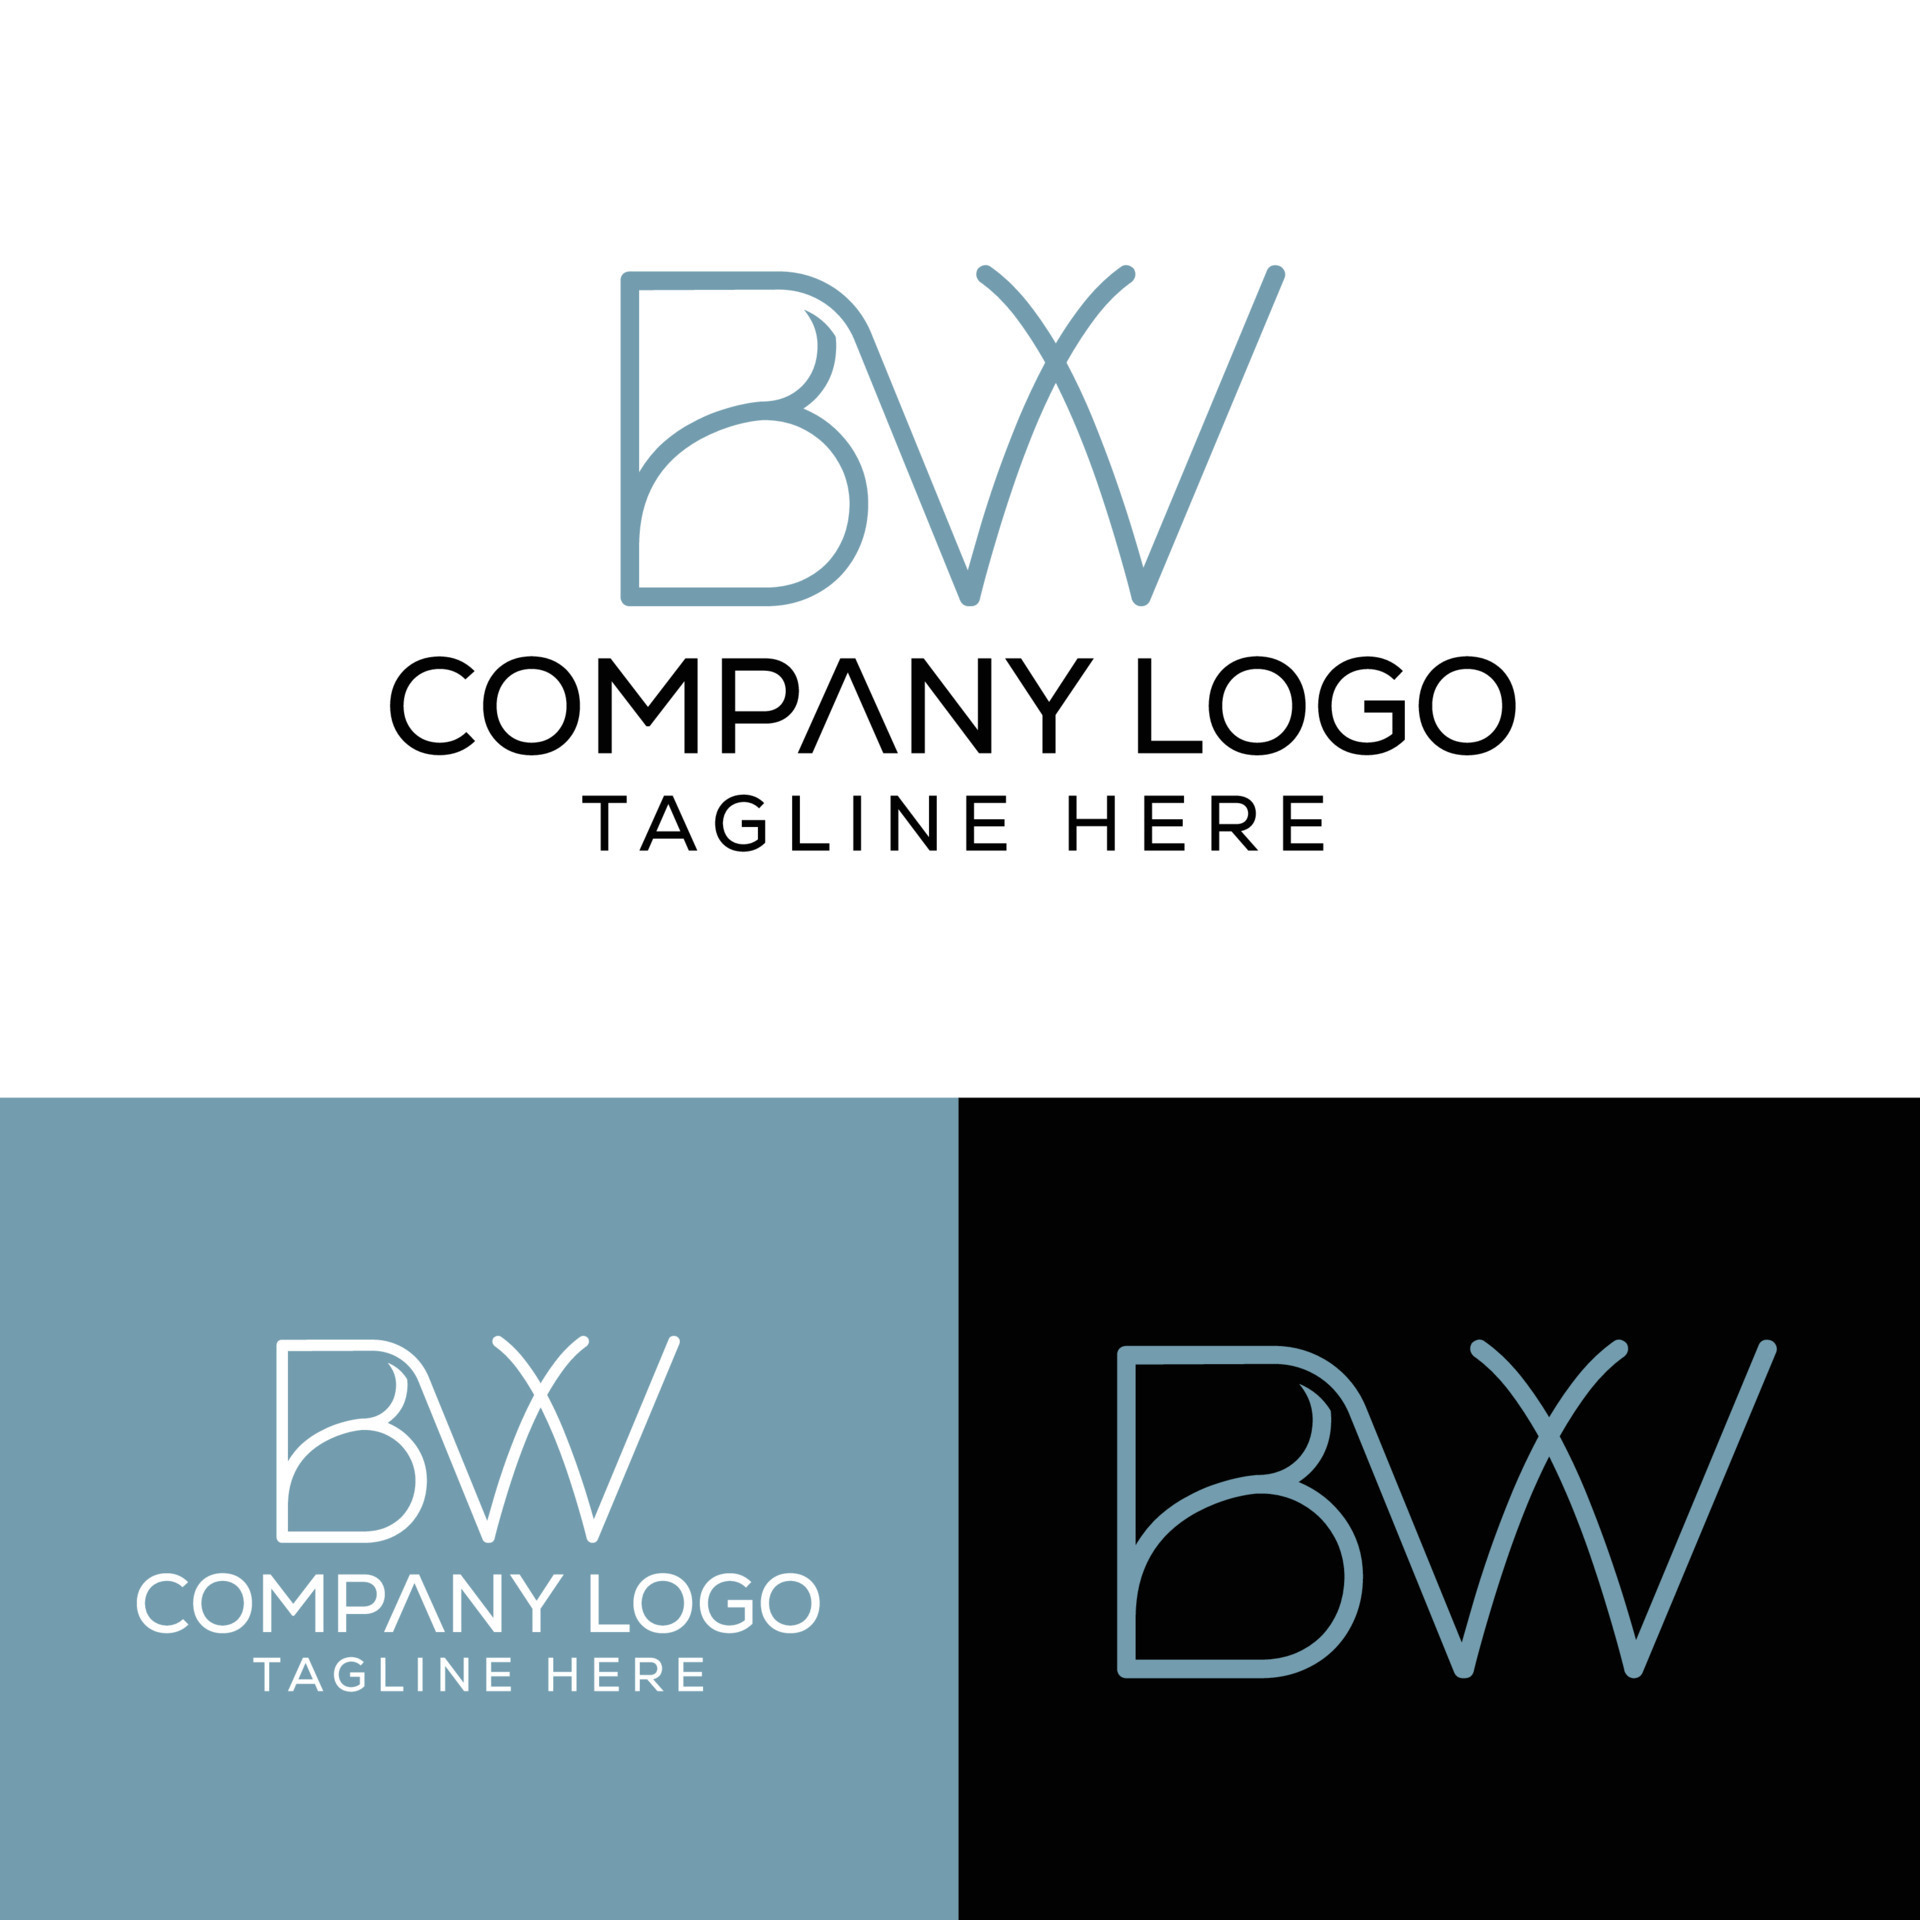 Premium Vector | Bw logo design template vector graphic branding element